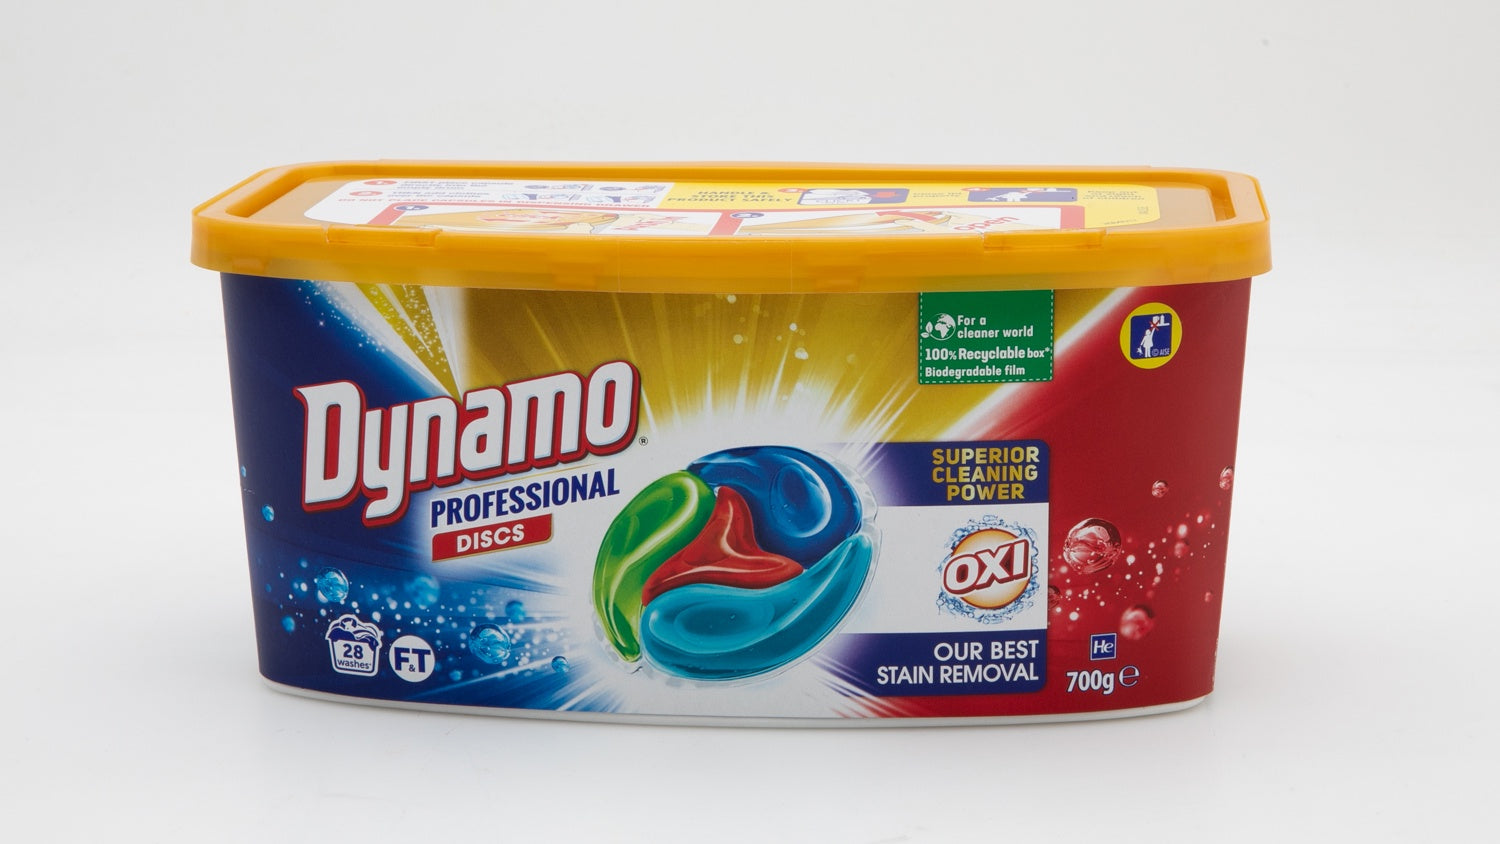 Dynamo Professional Oxi Discs 28pk